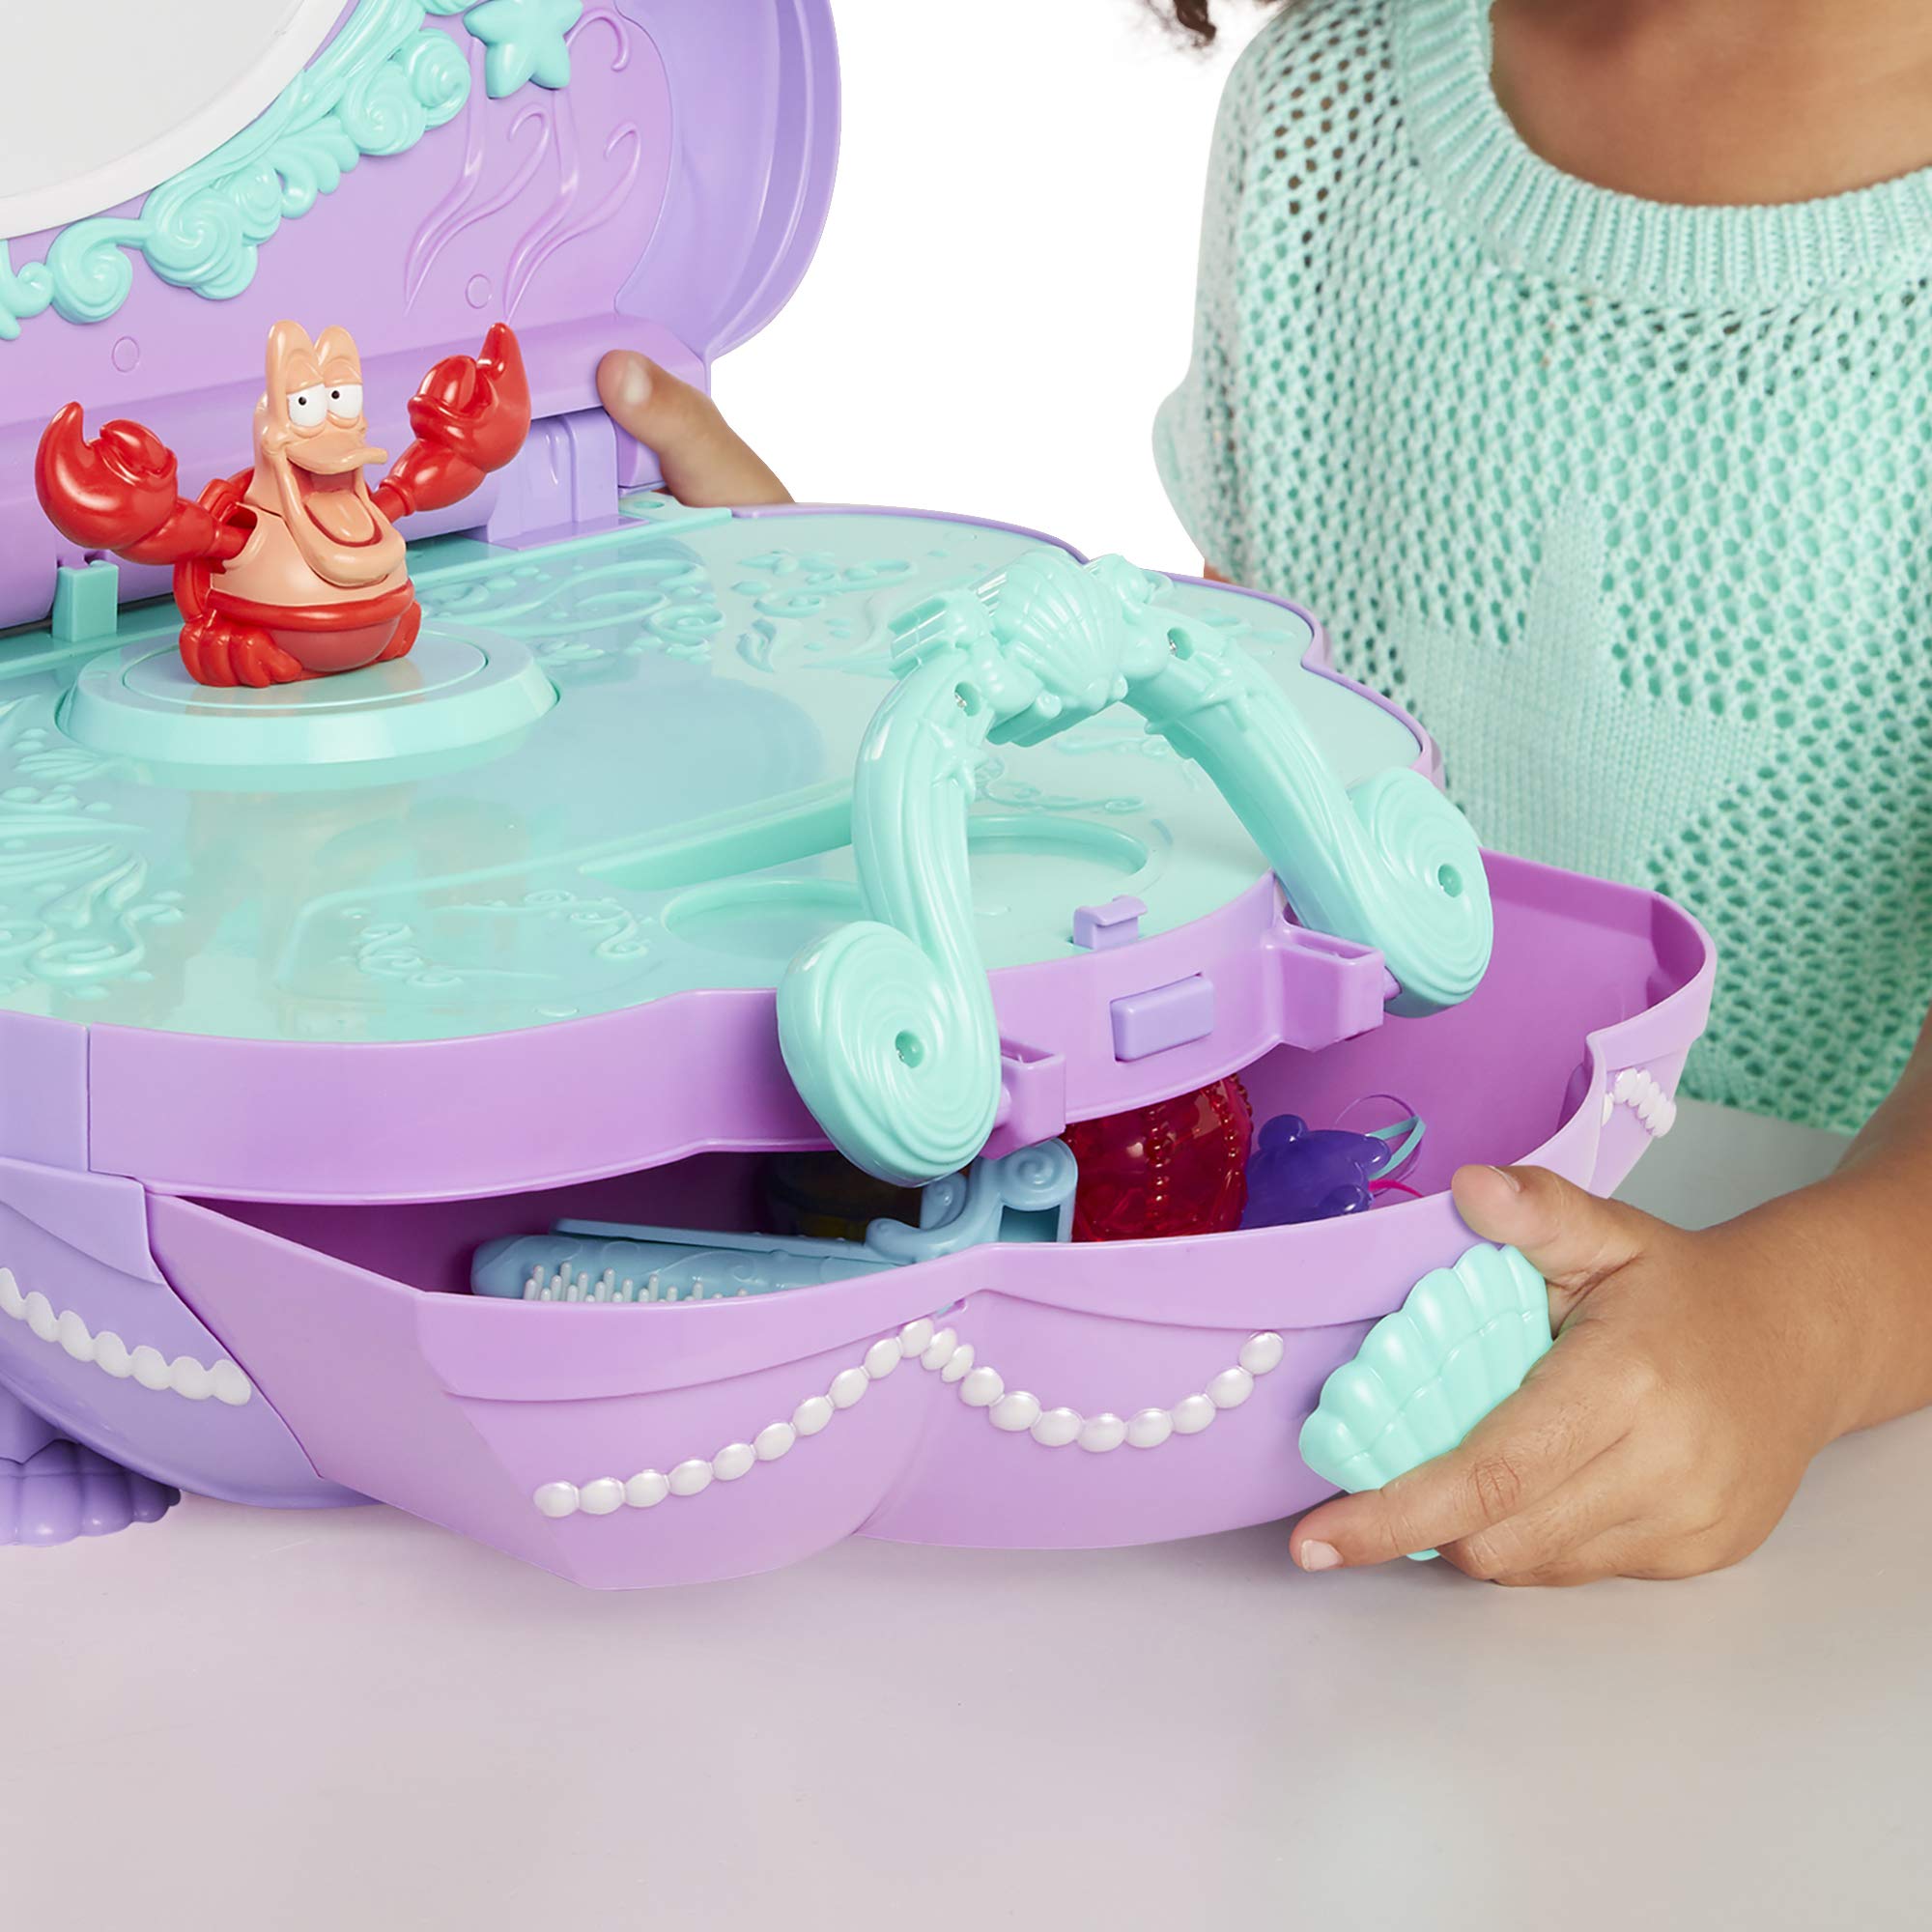 Disney Princess Ariel's Vanity Under The Sea Tabletop Music & Light's Vanity for Girls Ages 3+